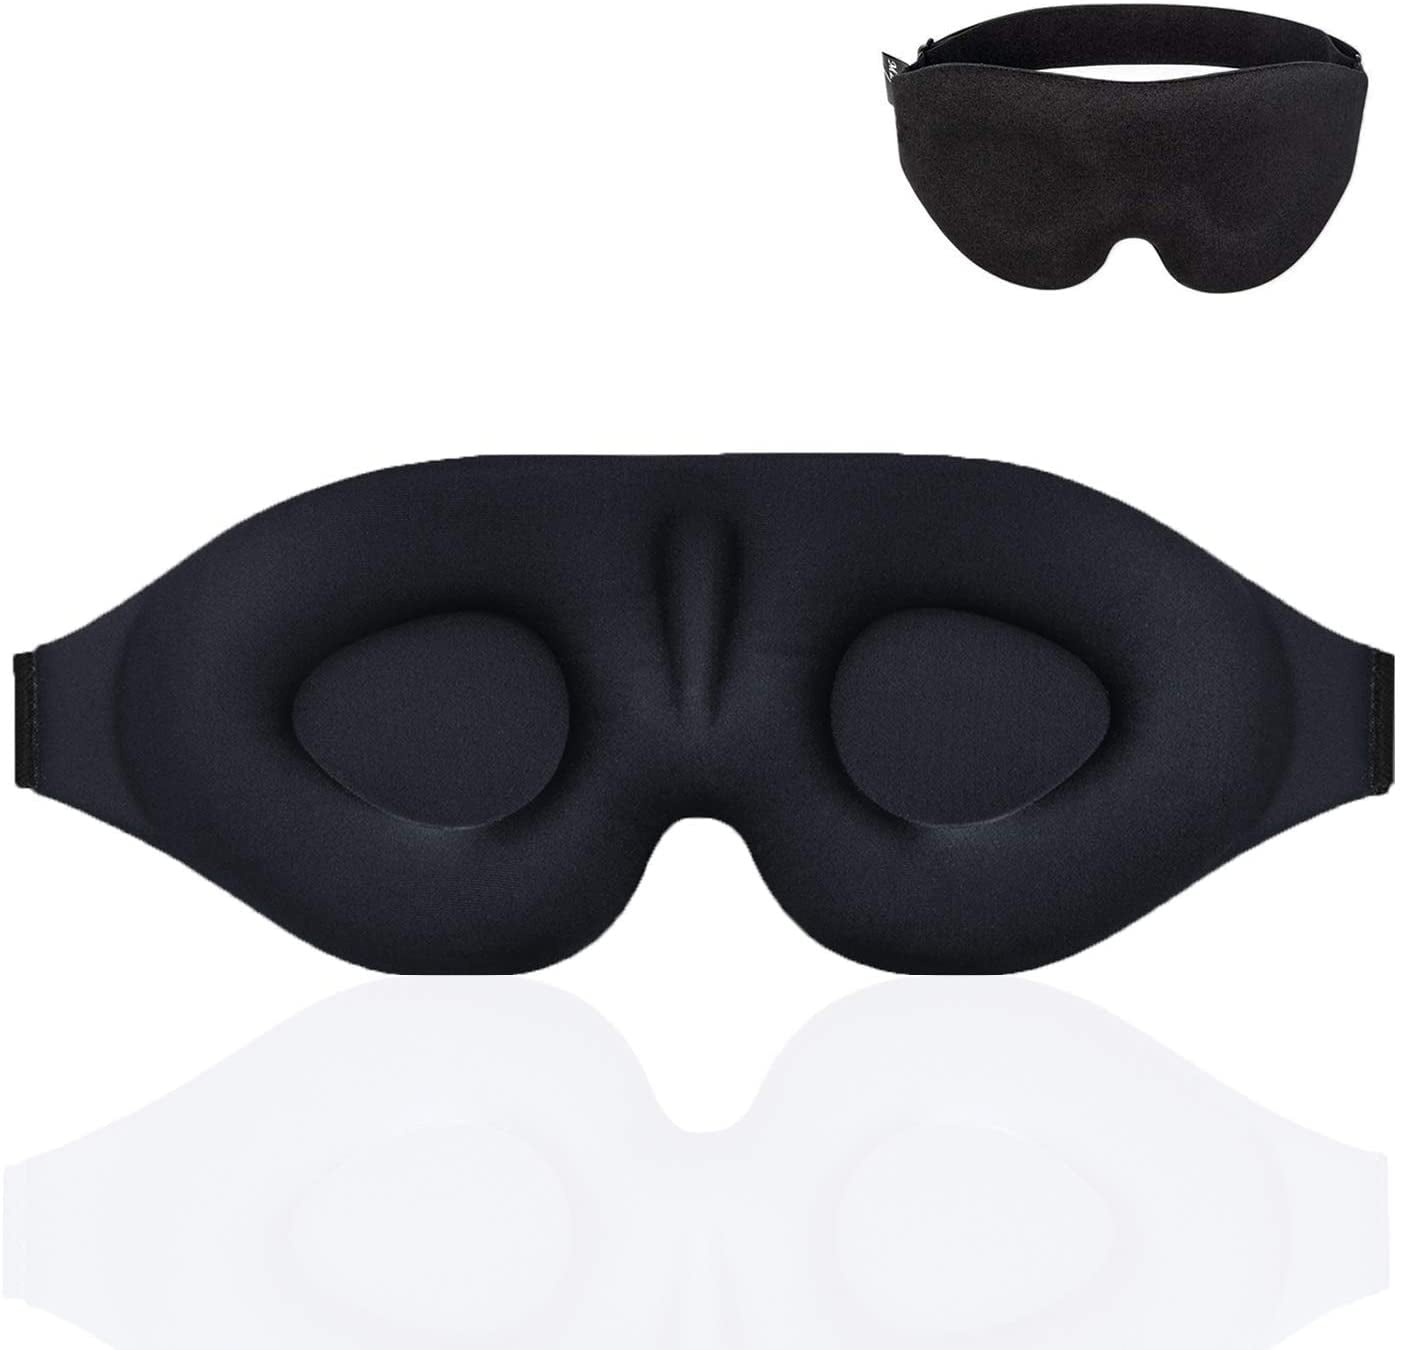 Soft Silk Padded Blindfold Blackout Eye Mask Travel Rest Sleep Aid Shade Cover Q 